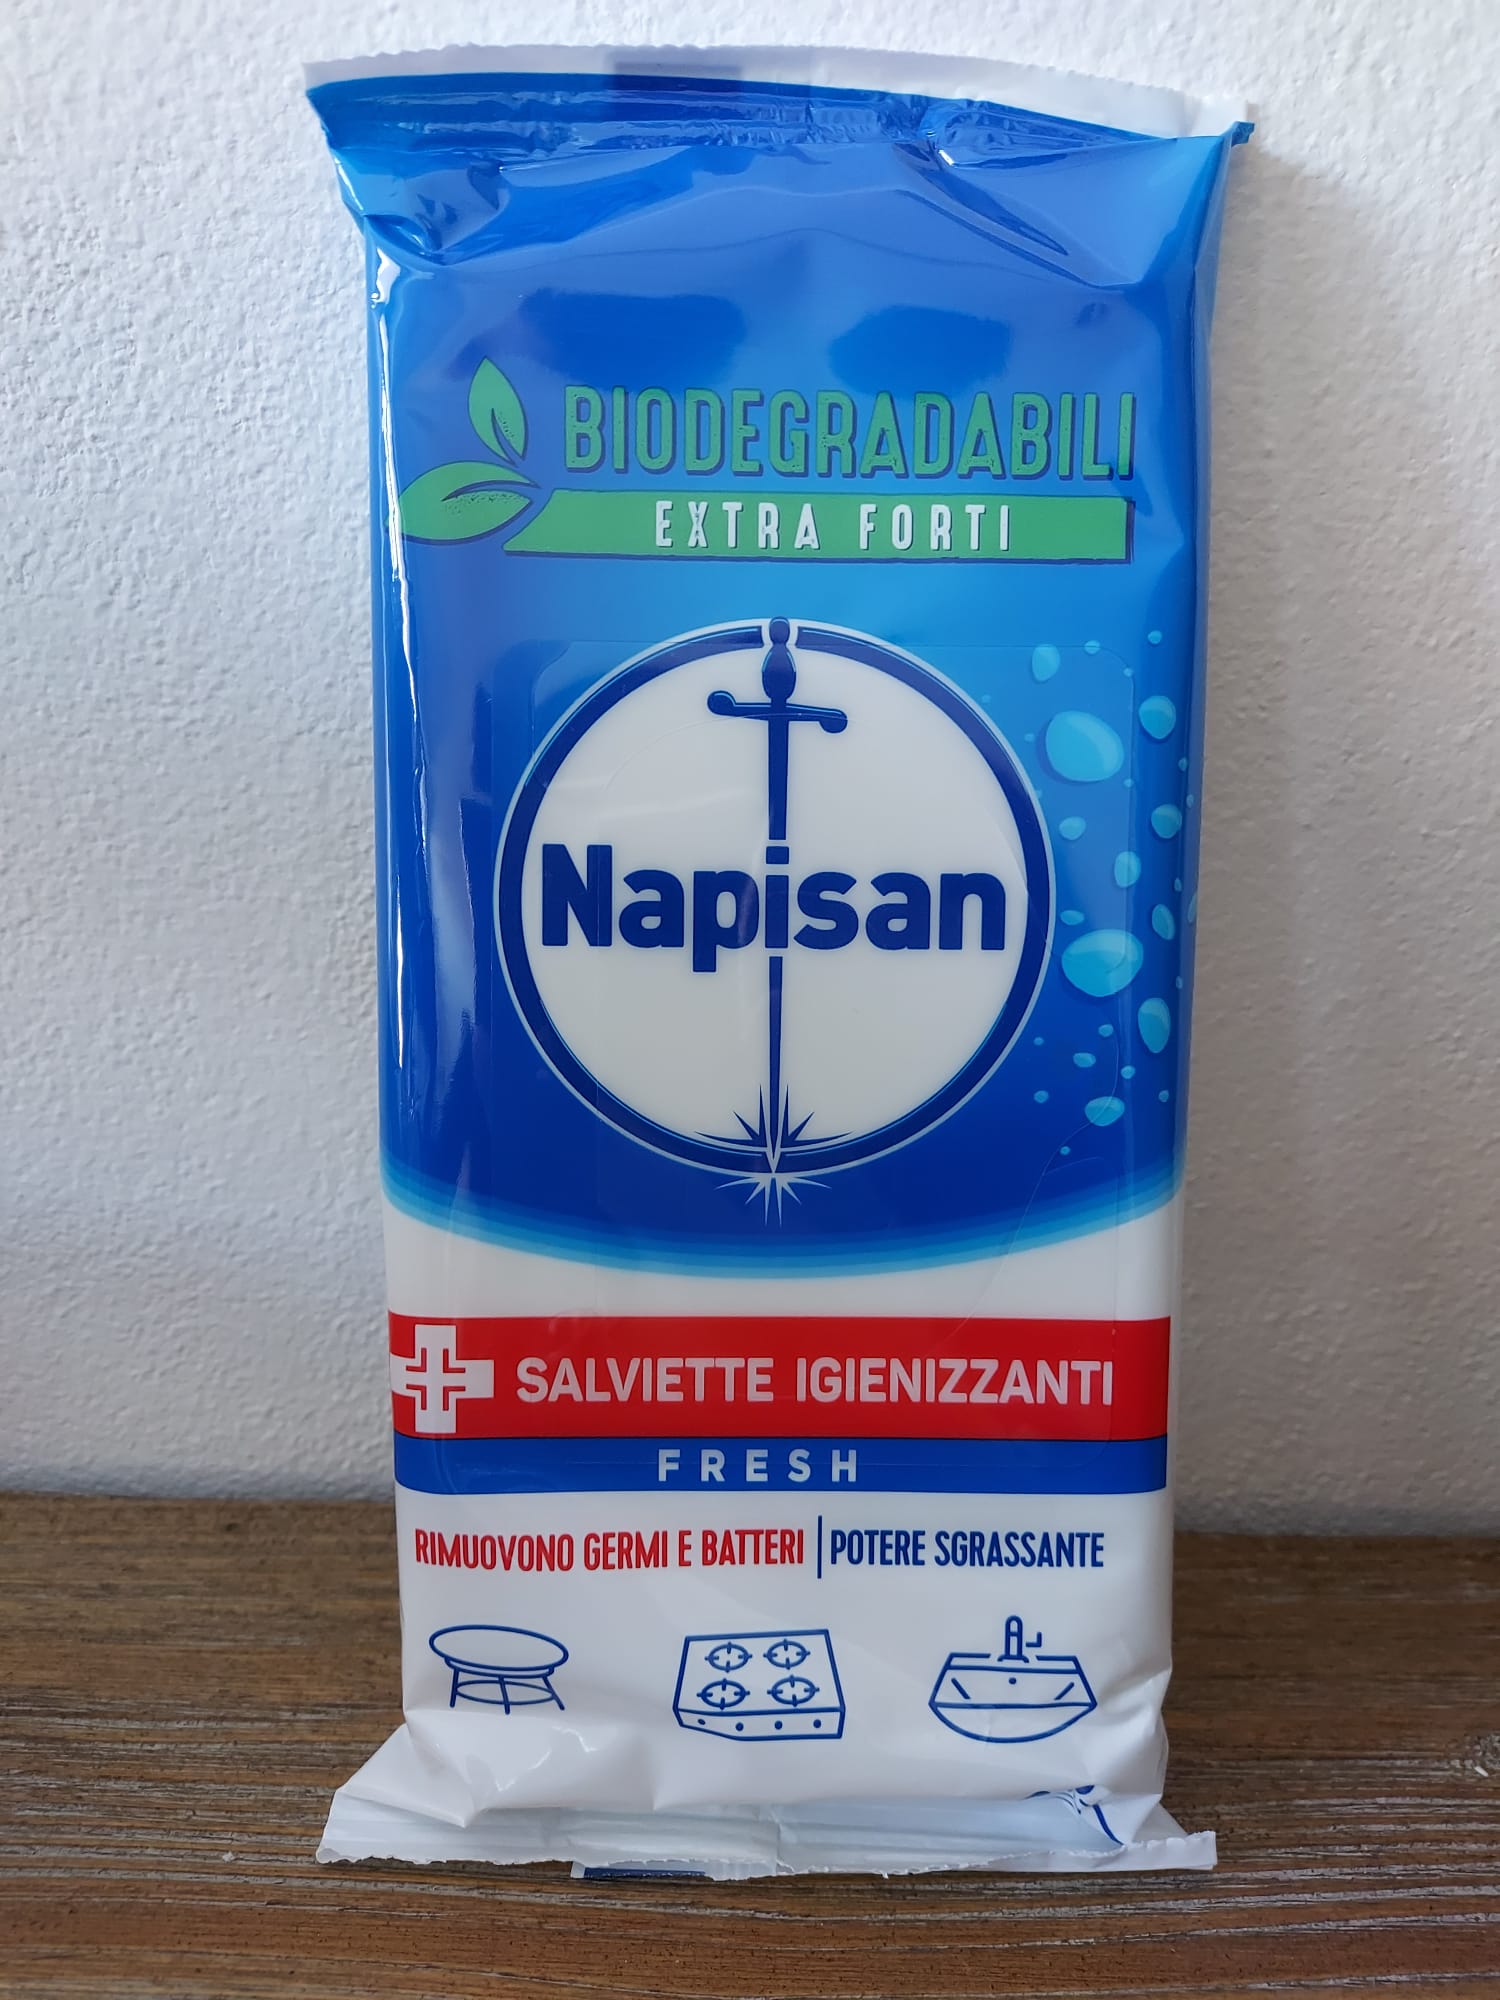 Conf. 40 salviette Napisan igienizzanti fresh